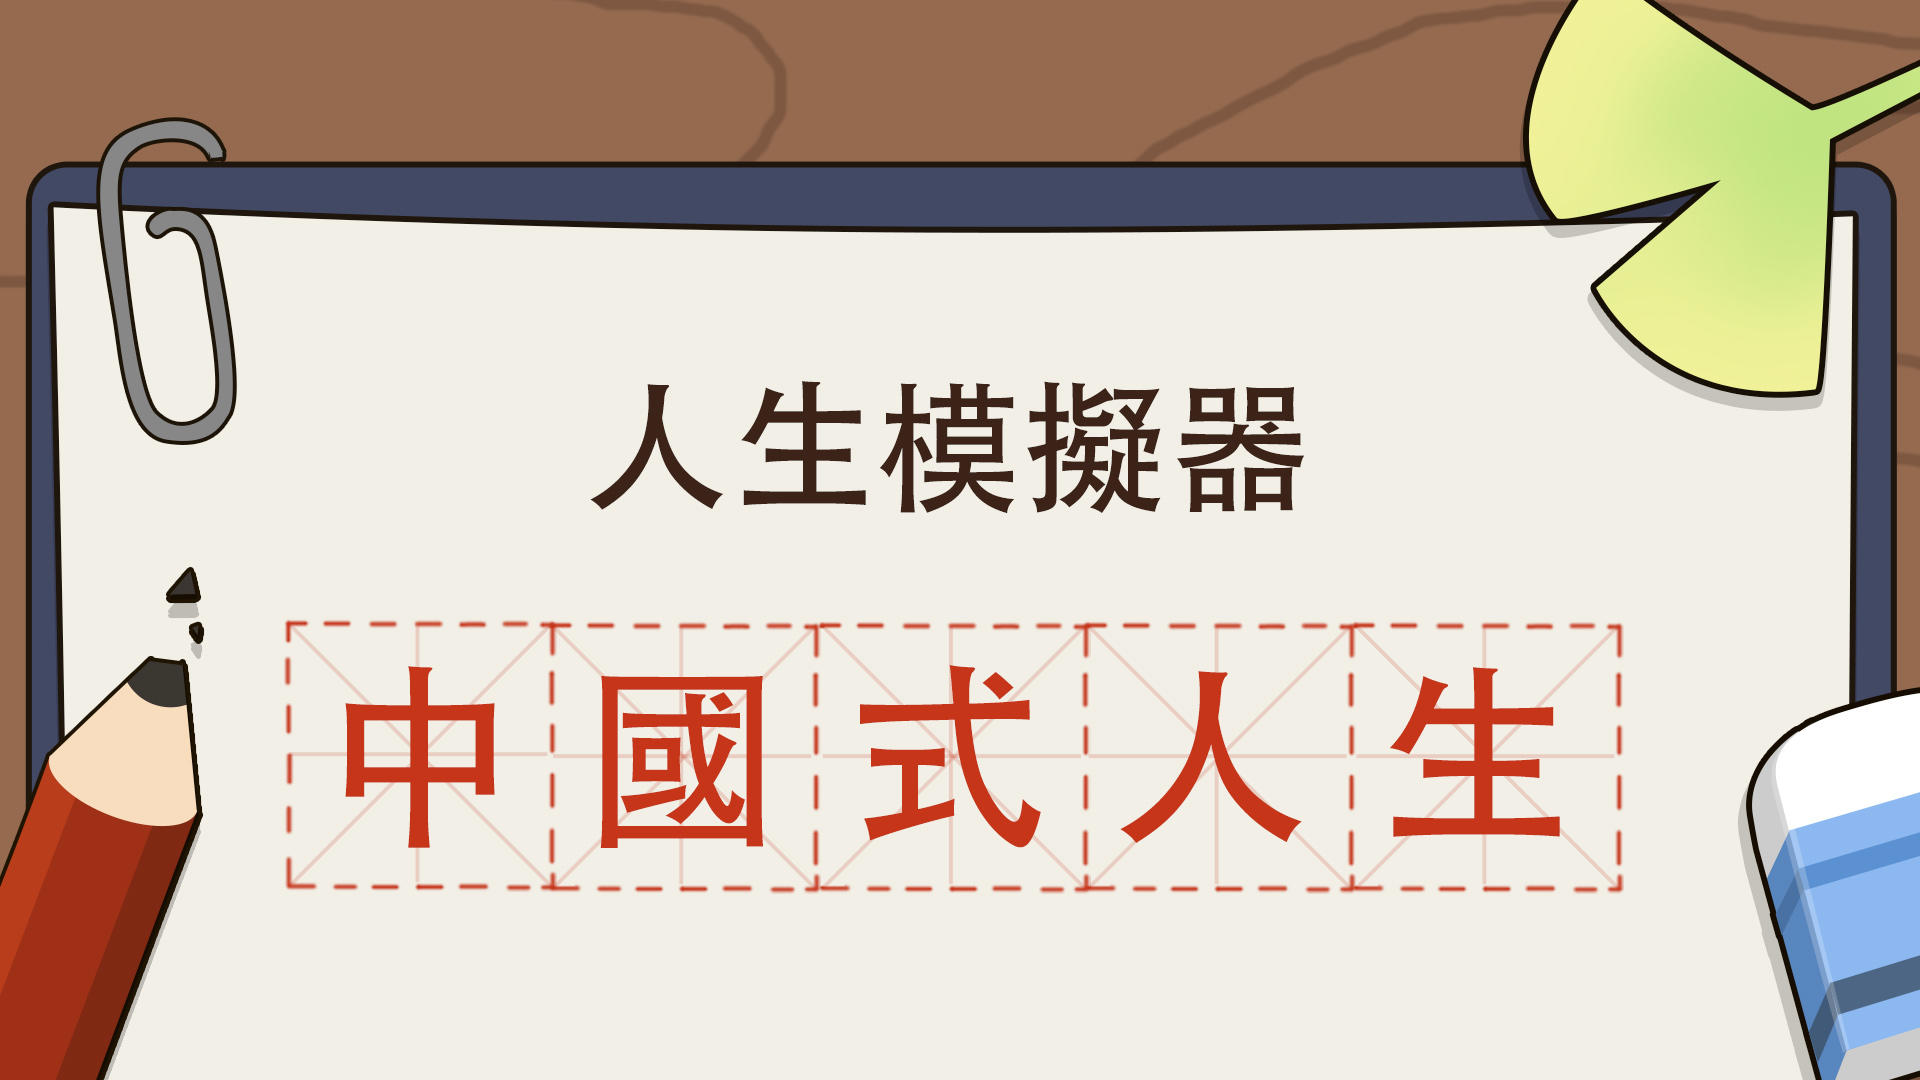 Banner of 人生模擬器：中國式人生 